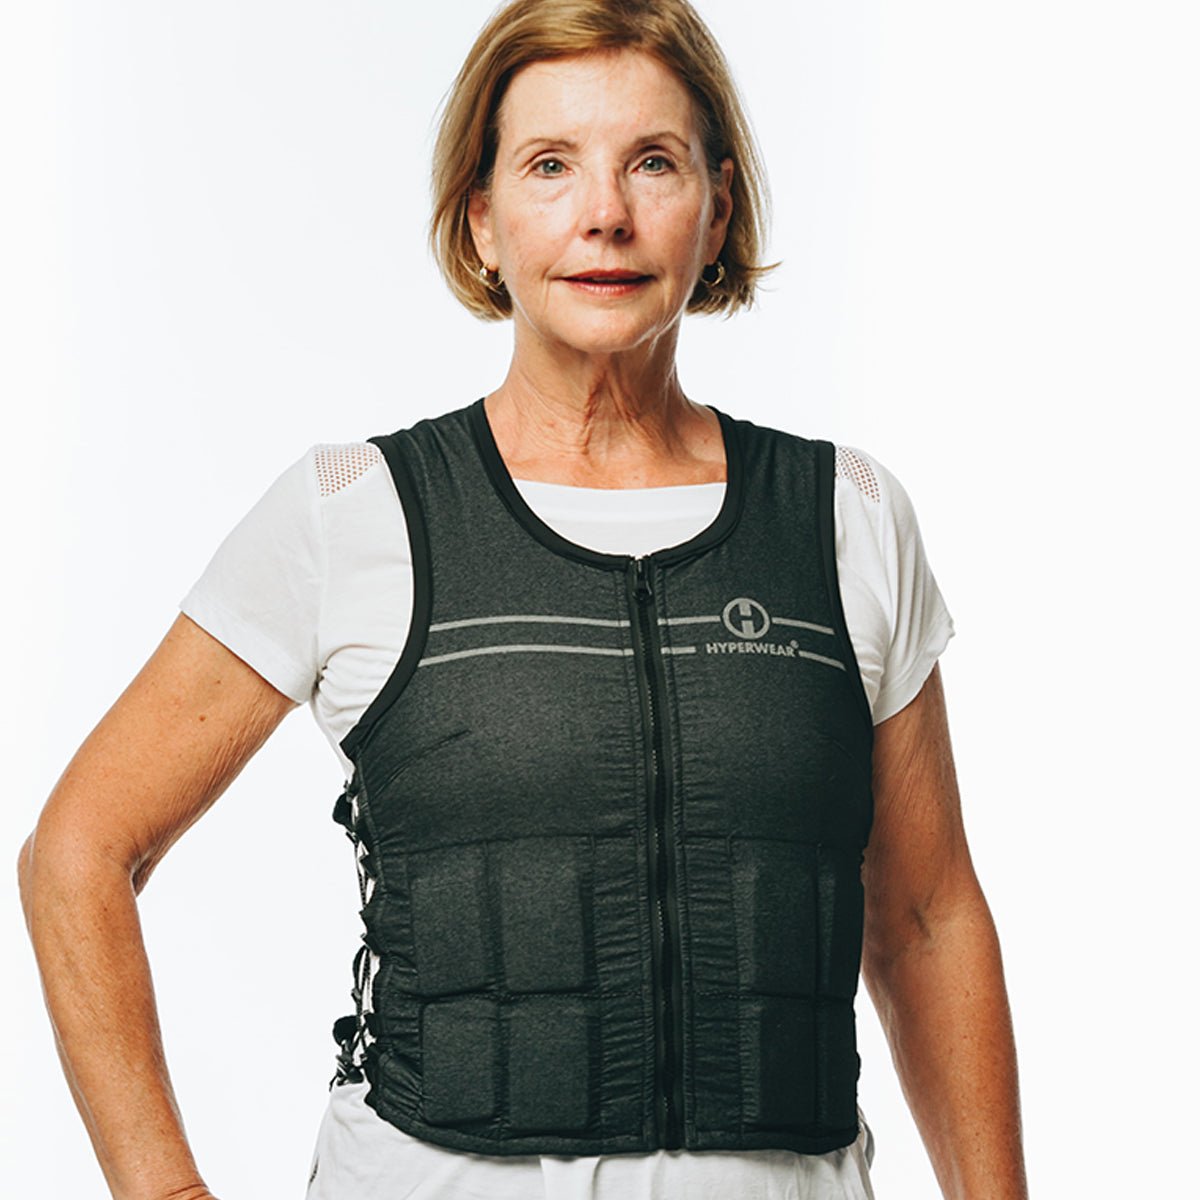 Reflective vest. Comfort - BLOK